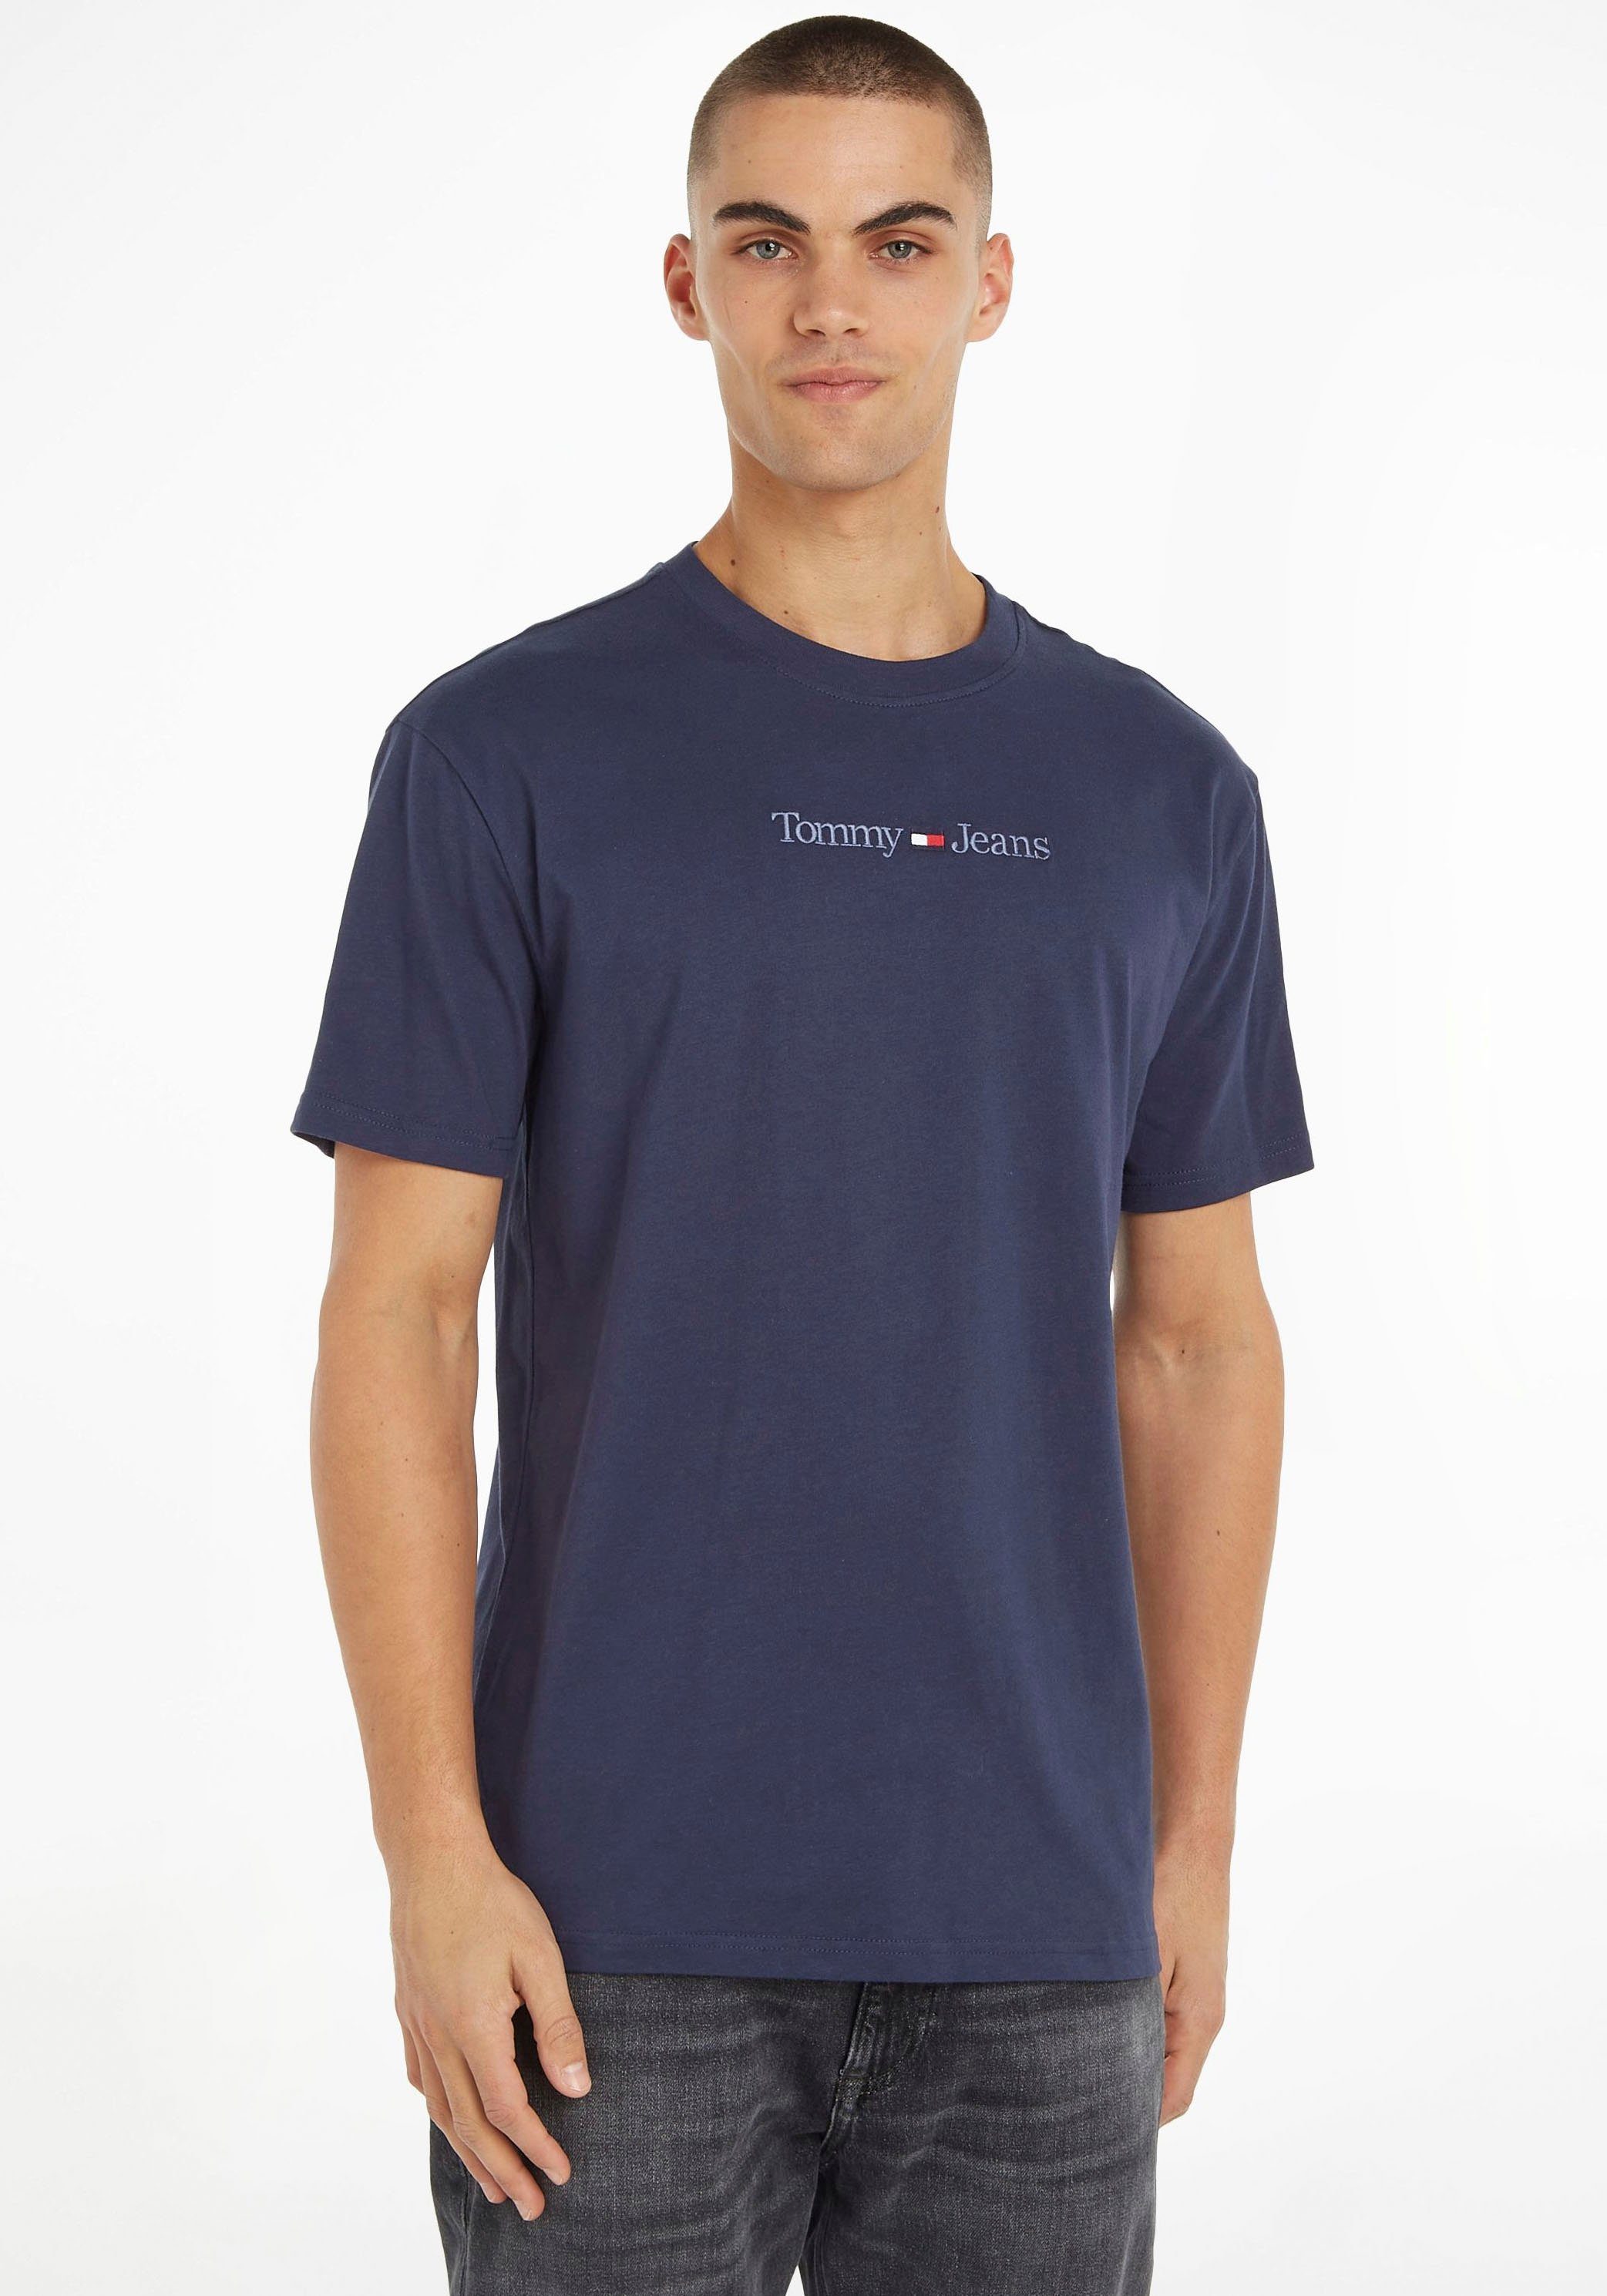 SMALL Tommy Navy Twilight T-Shirt TEXT TEE CLSC Jeans TJM